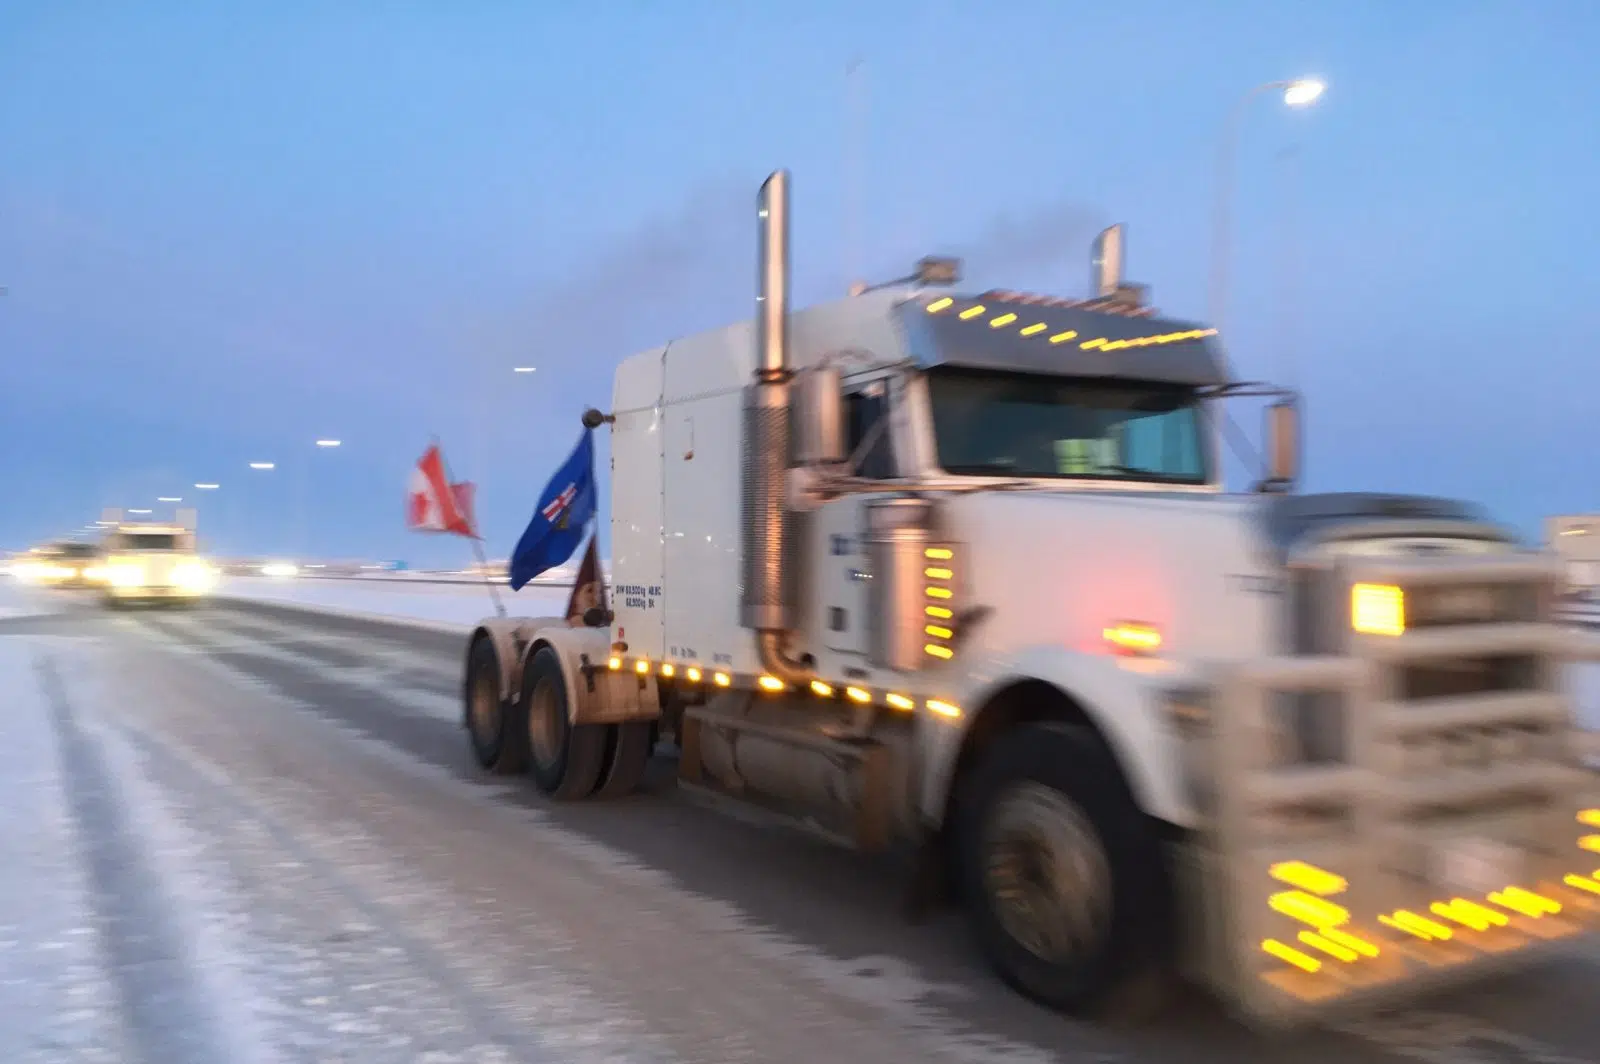 Pro-oil convoy makes stop near Regina on the way to Ottawa